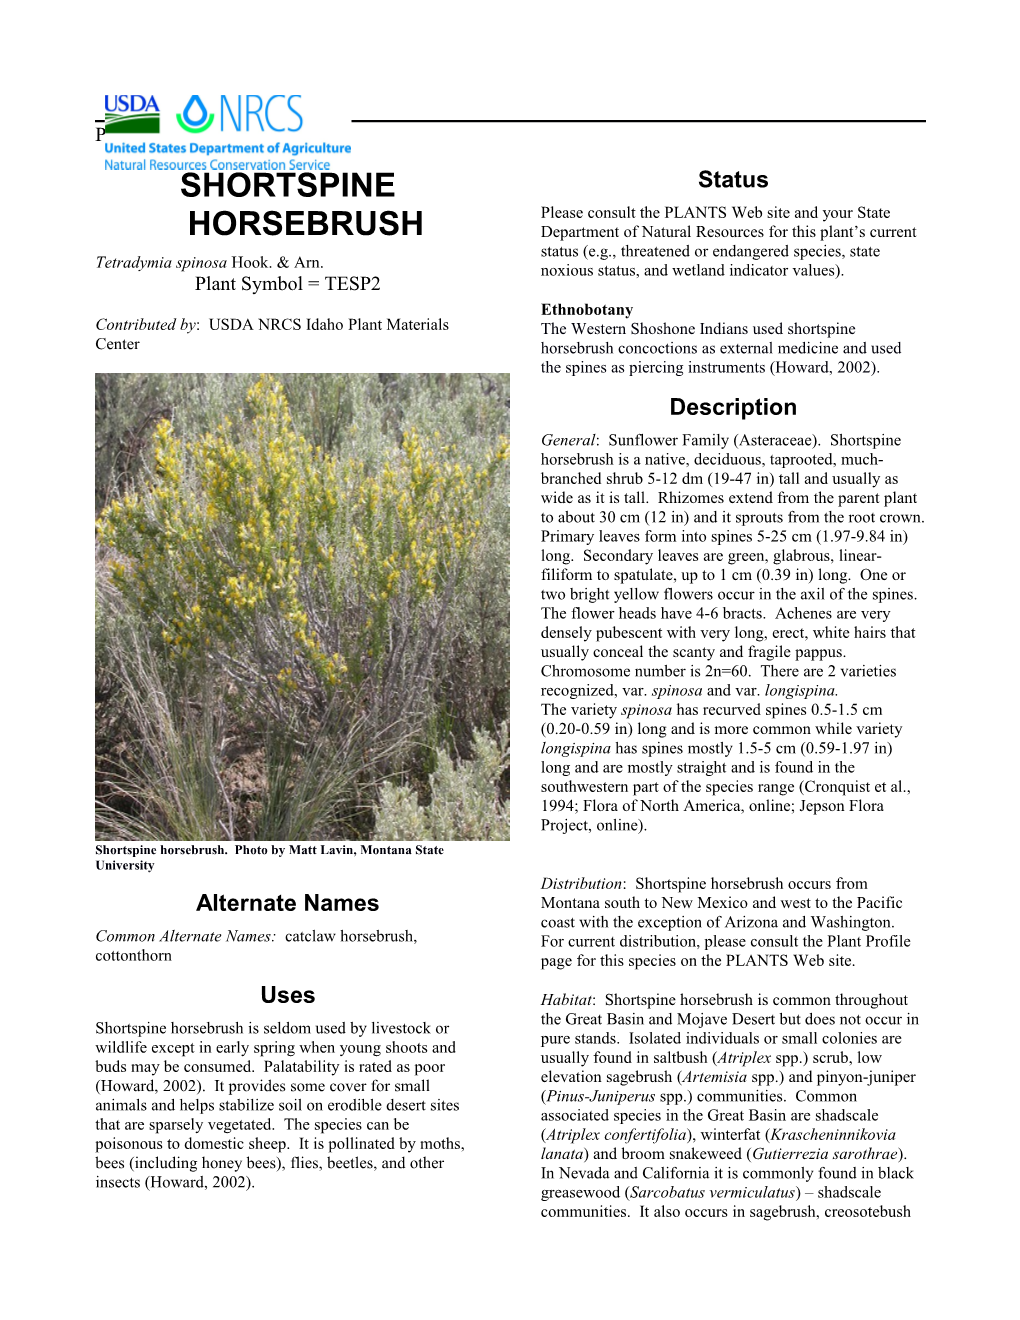 Plant Guide for Shortspine Horsebrush (Tetradymia Spinosa)